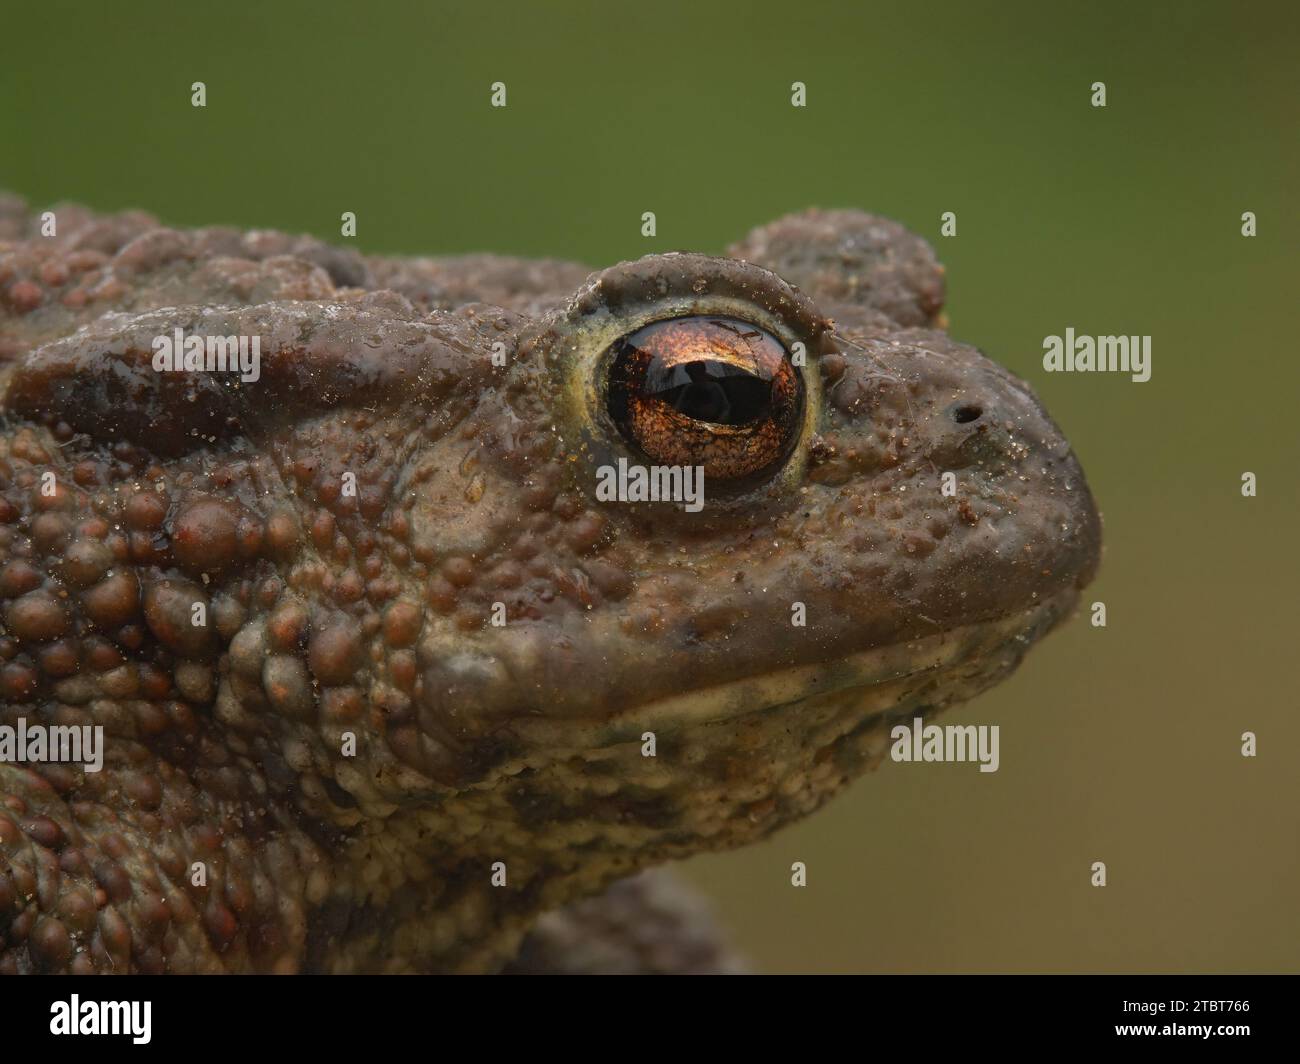 Natural facial closeup on a female Common European toad, Bufo bufo from the garden Stock Photo